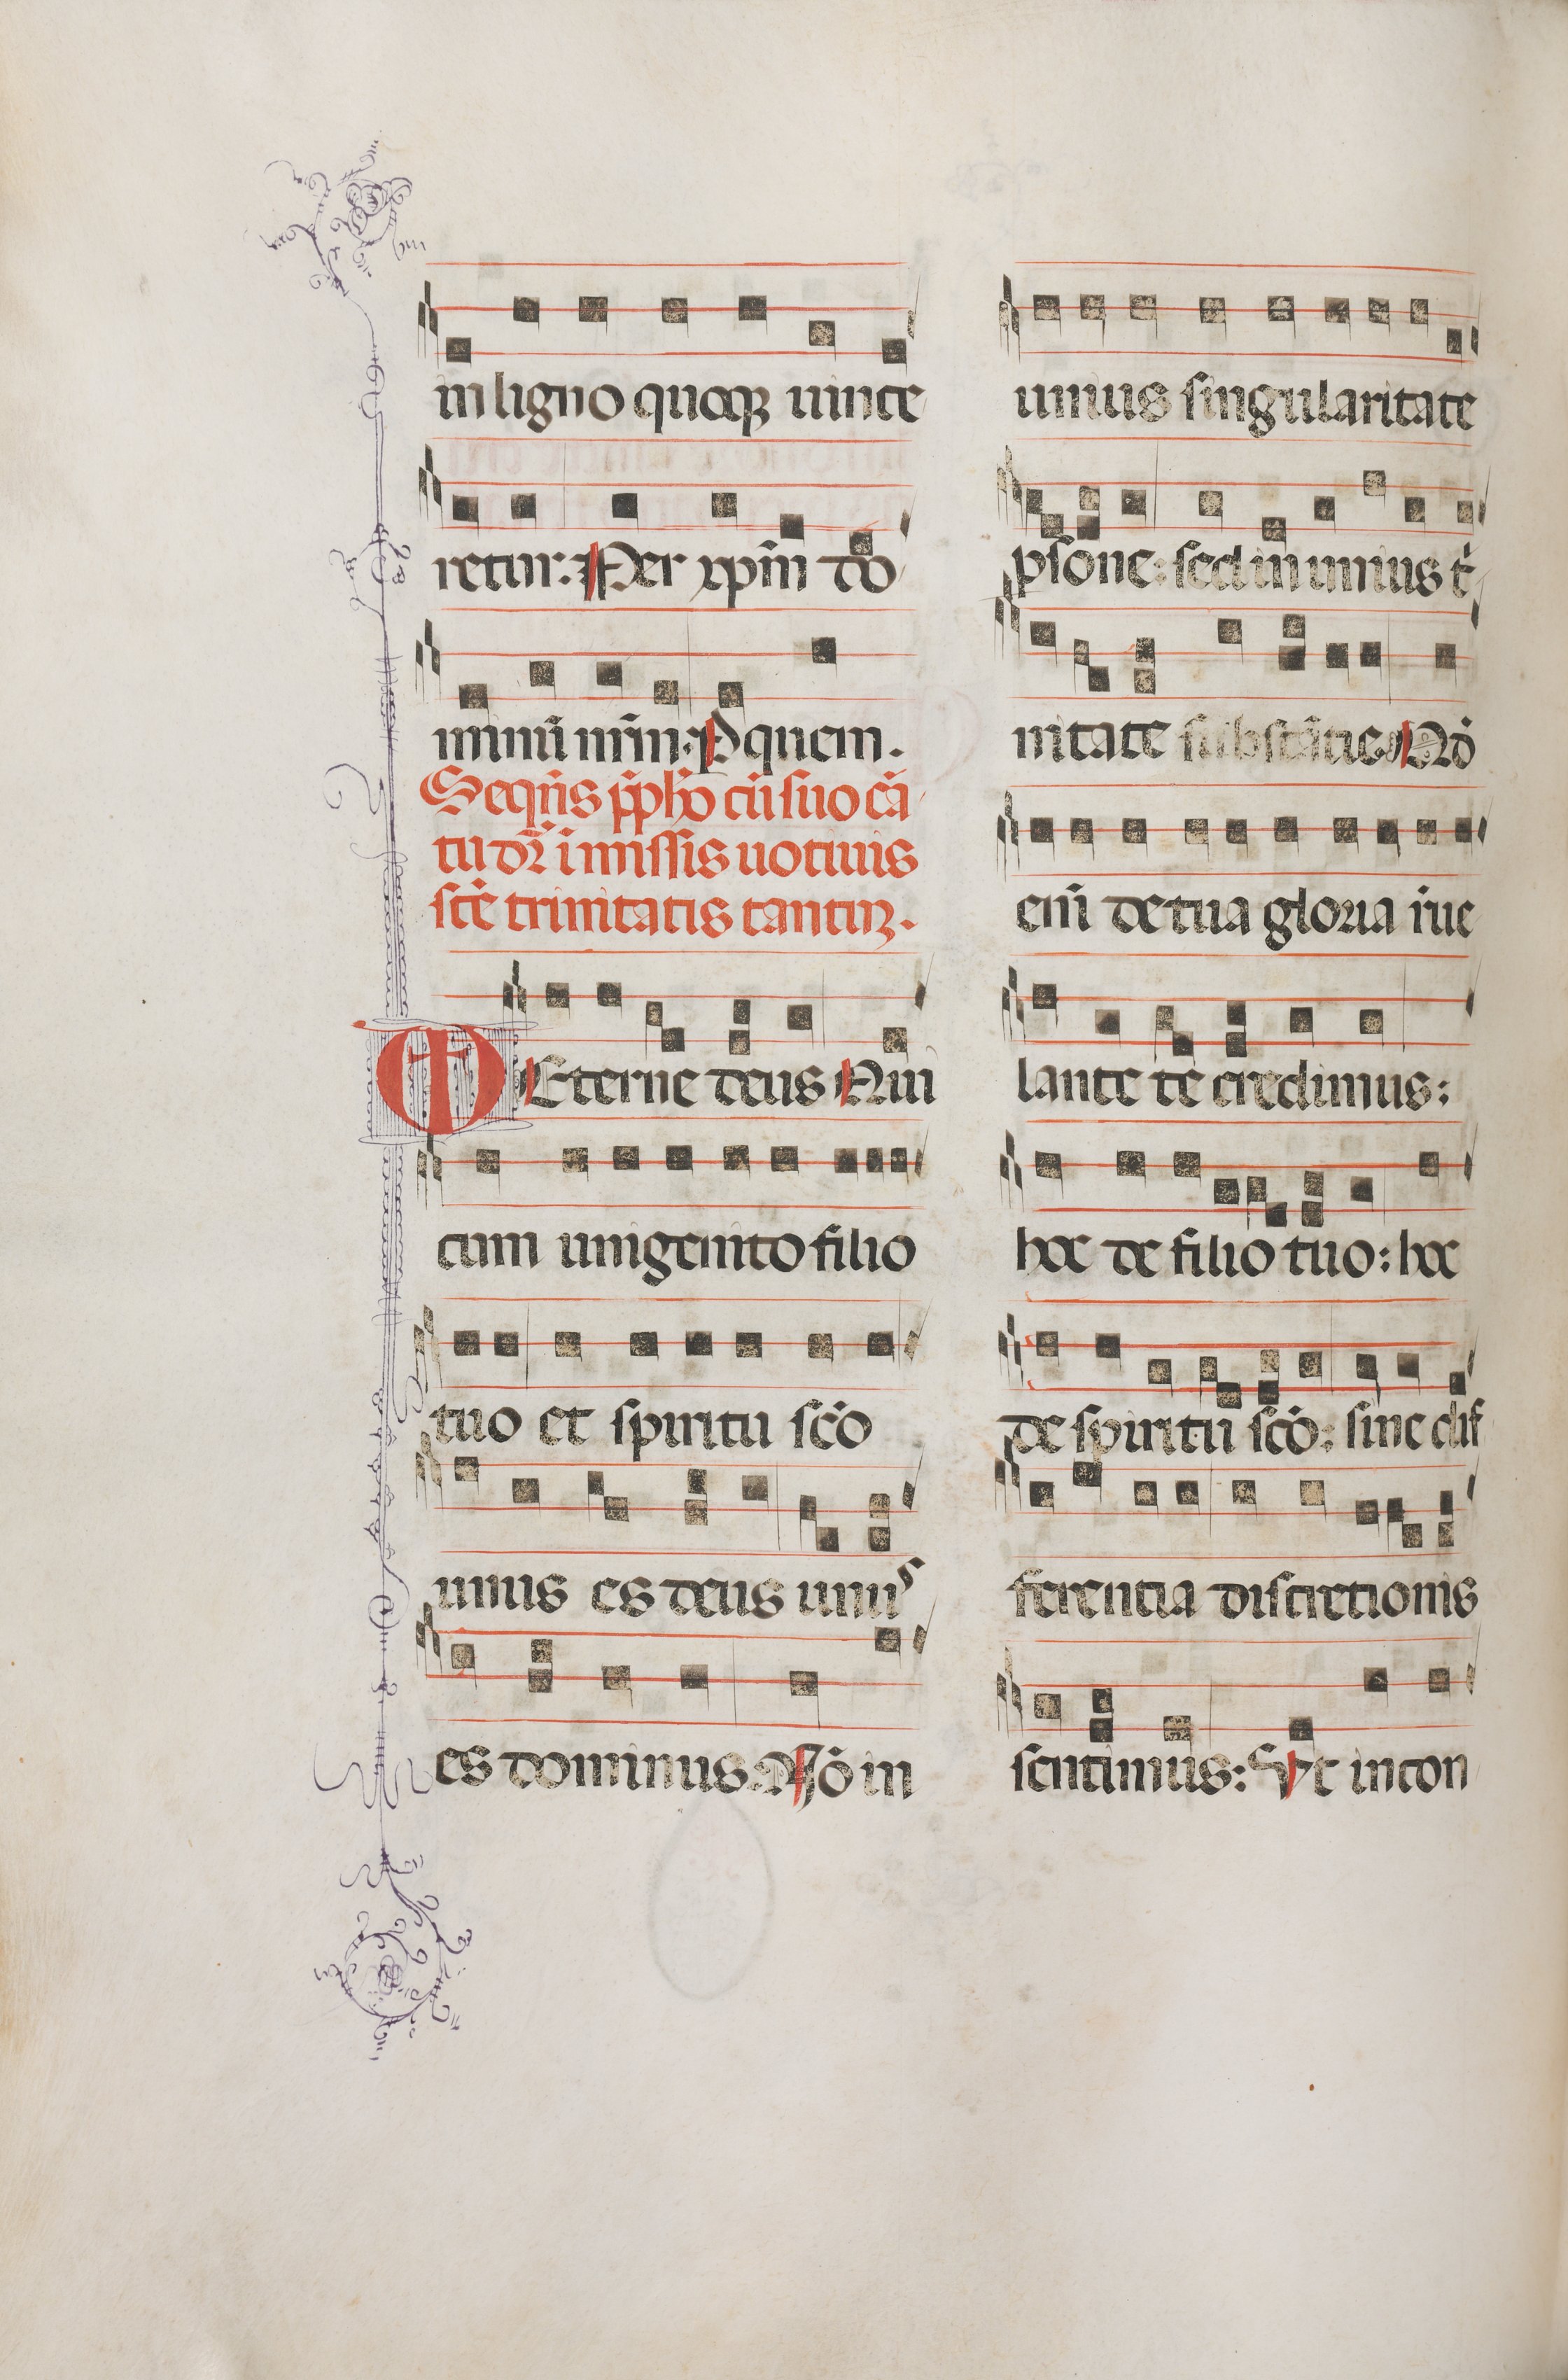 Missale: Fol. 182v: Music for various ordinary prayers